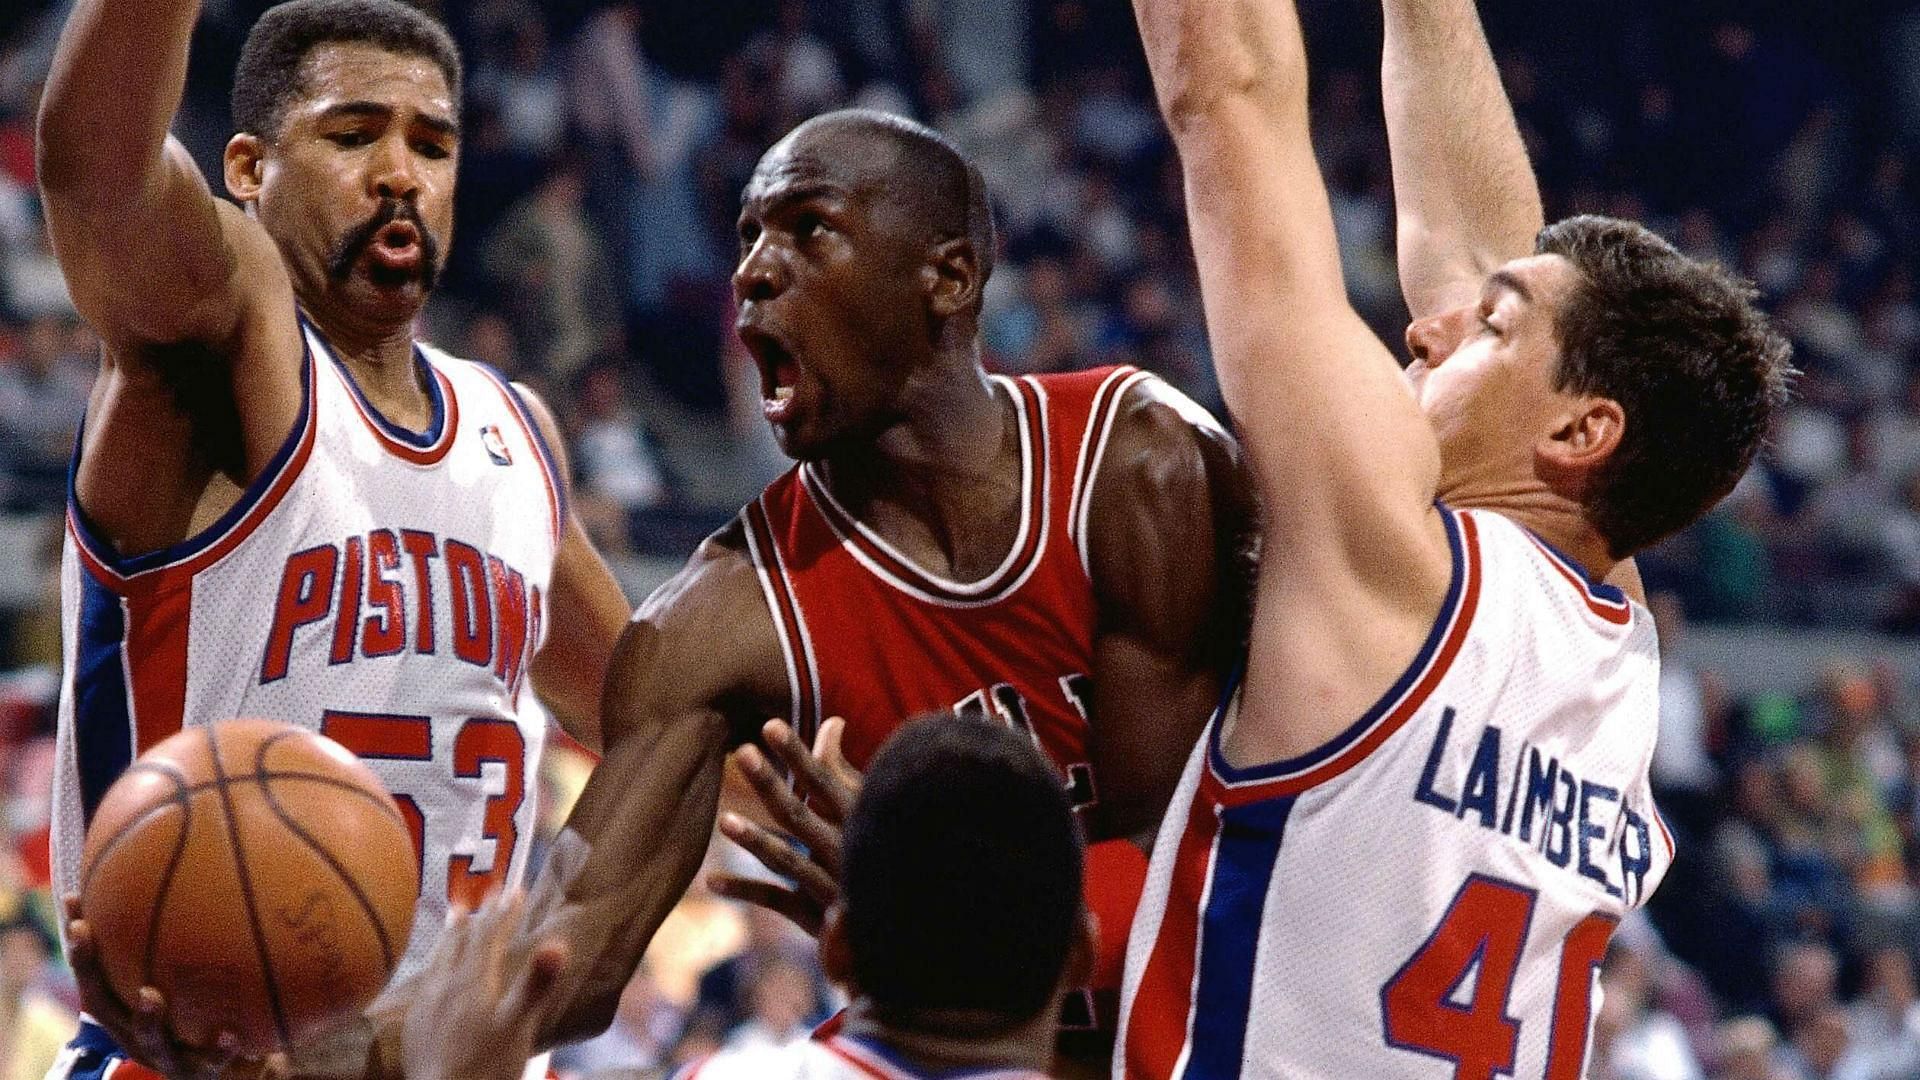 Michael Jordan against the Detroit Pistons (Photo: Sporting News)